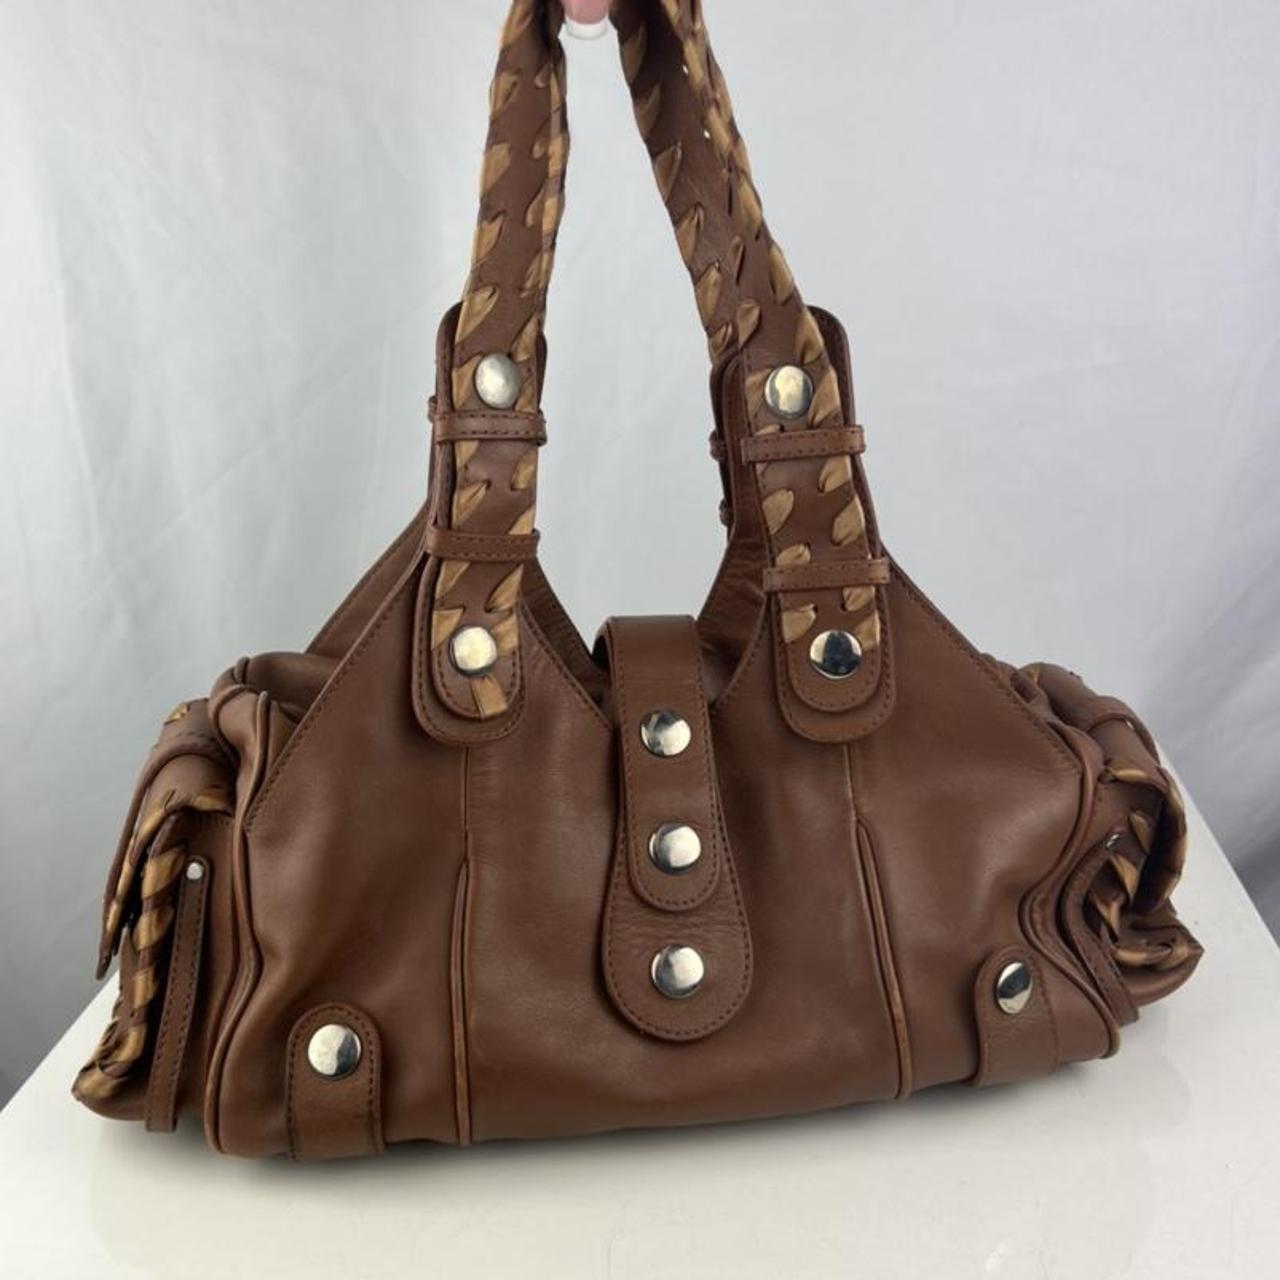 Authentic Chloe Silverado Bag in Brown Leather /... - Depop